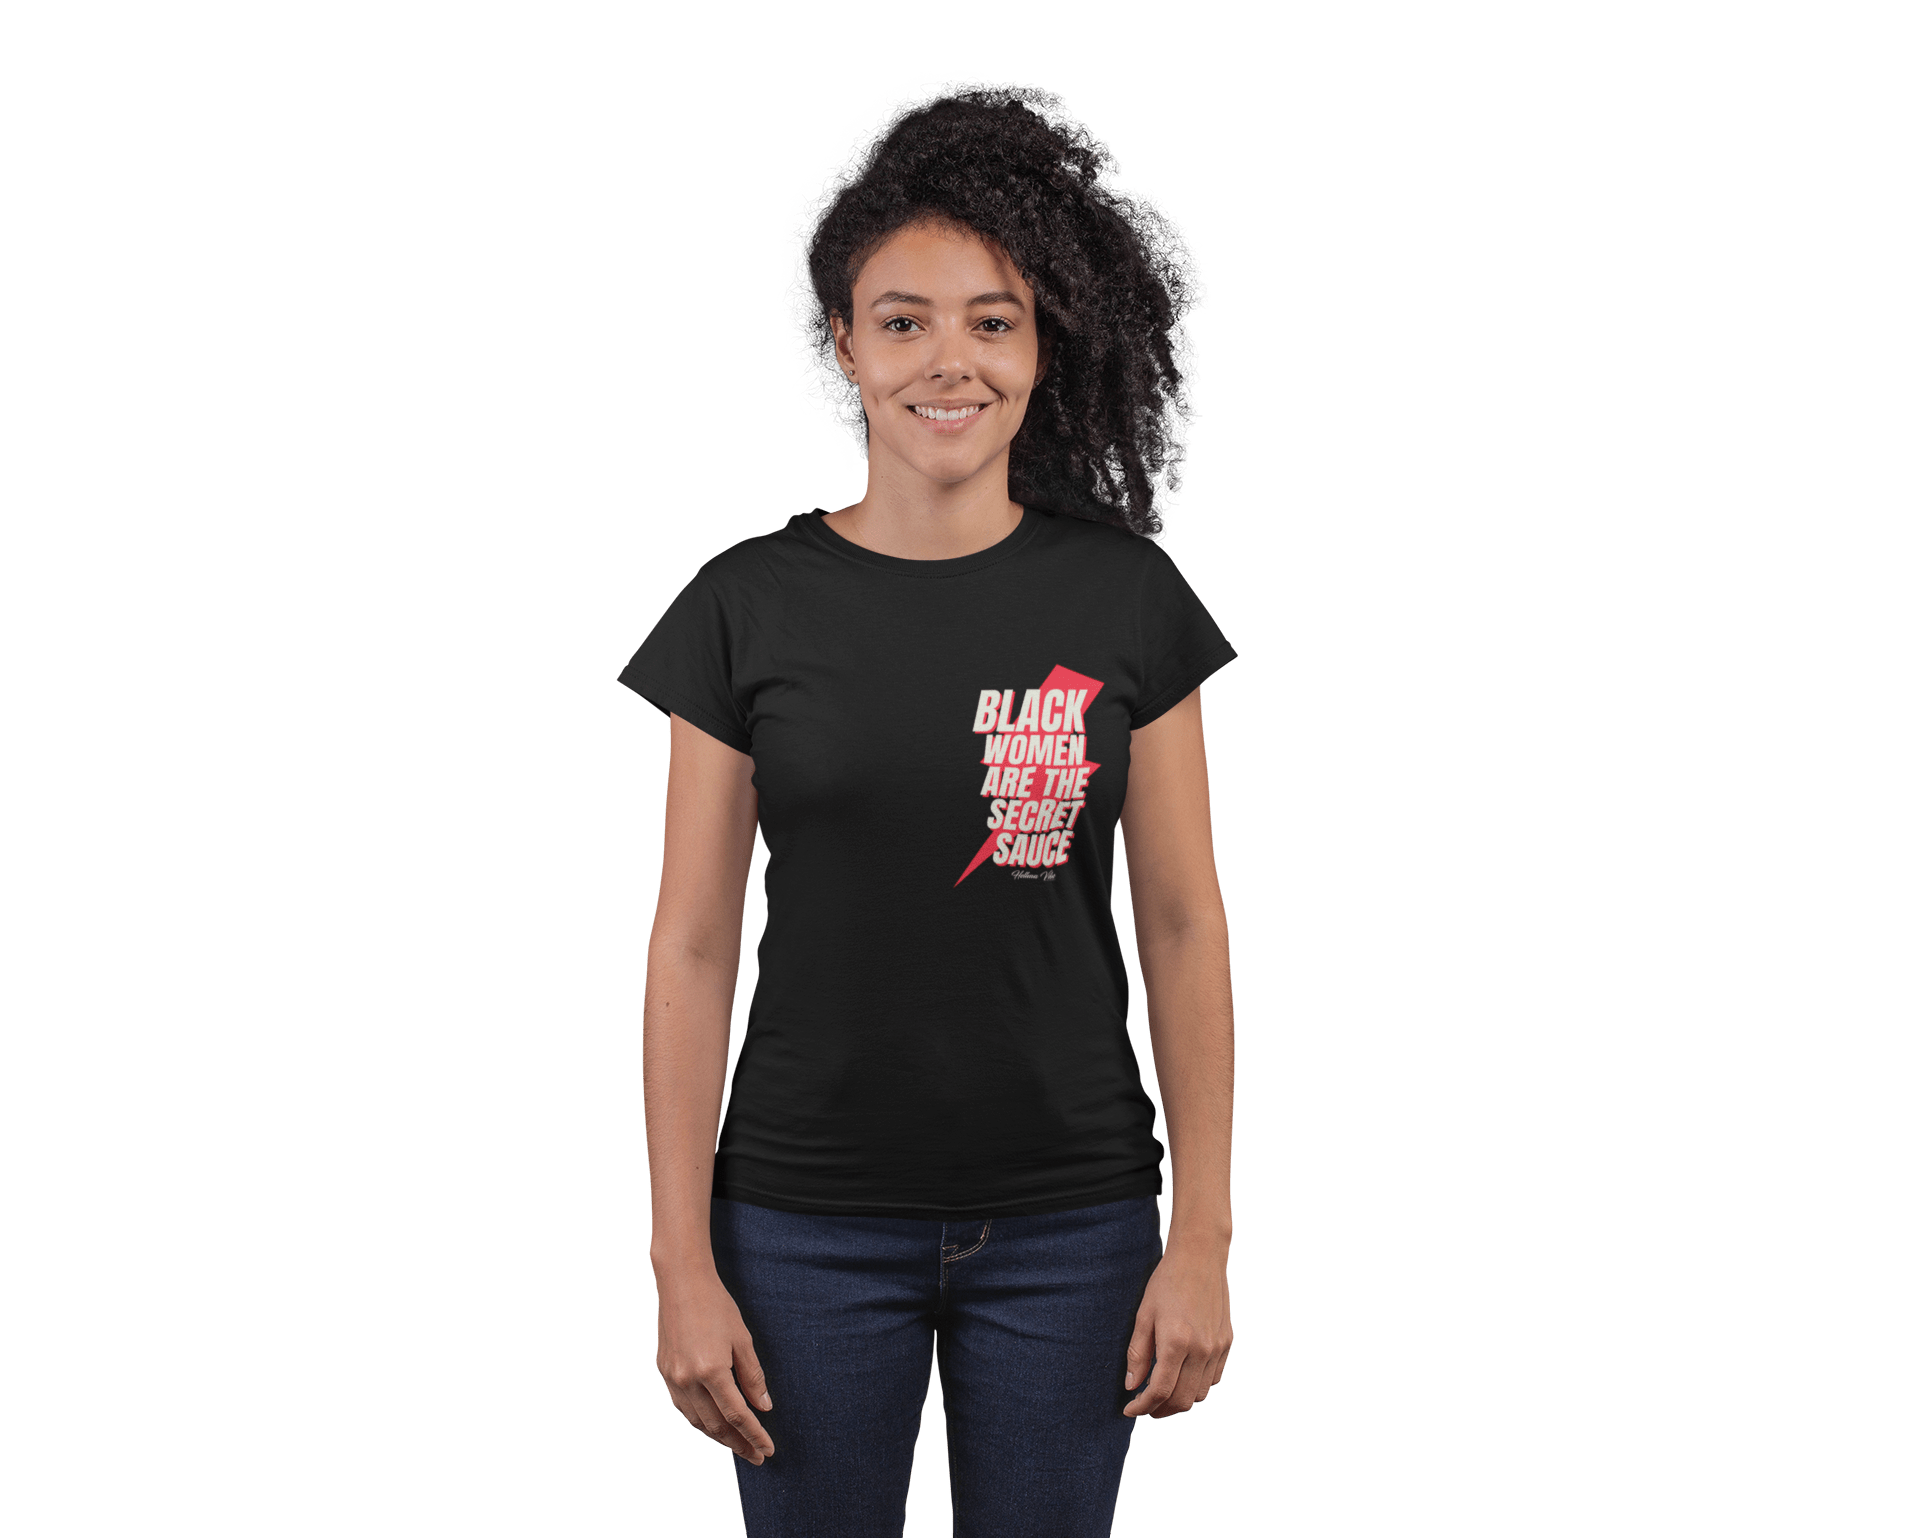 Black Women Are The Secret Sauce T-Shirt - Helluva Vibe Apparel